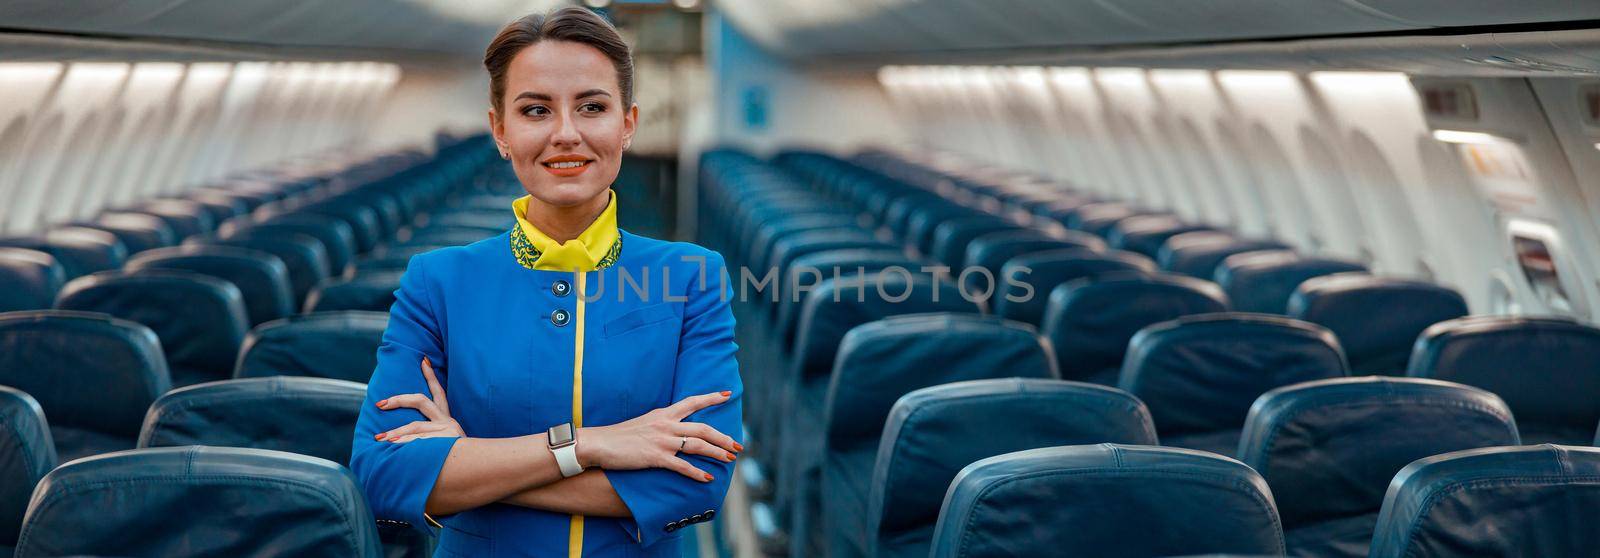 Joyful woman stewardess standing in aircraft passenger cabin by Yaroslav_astakhov